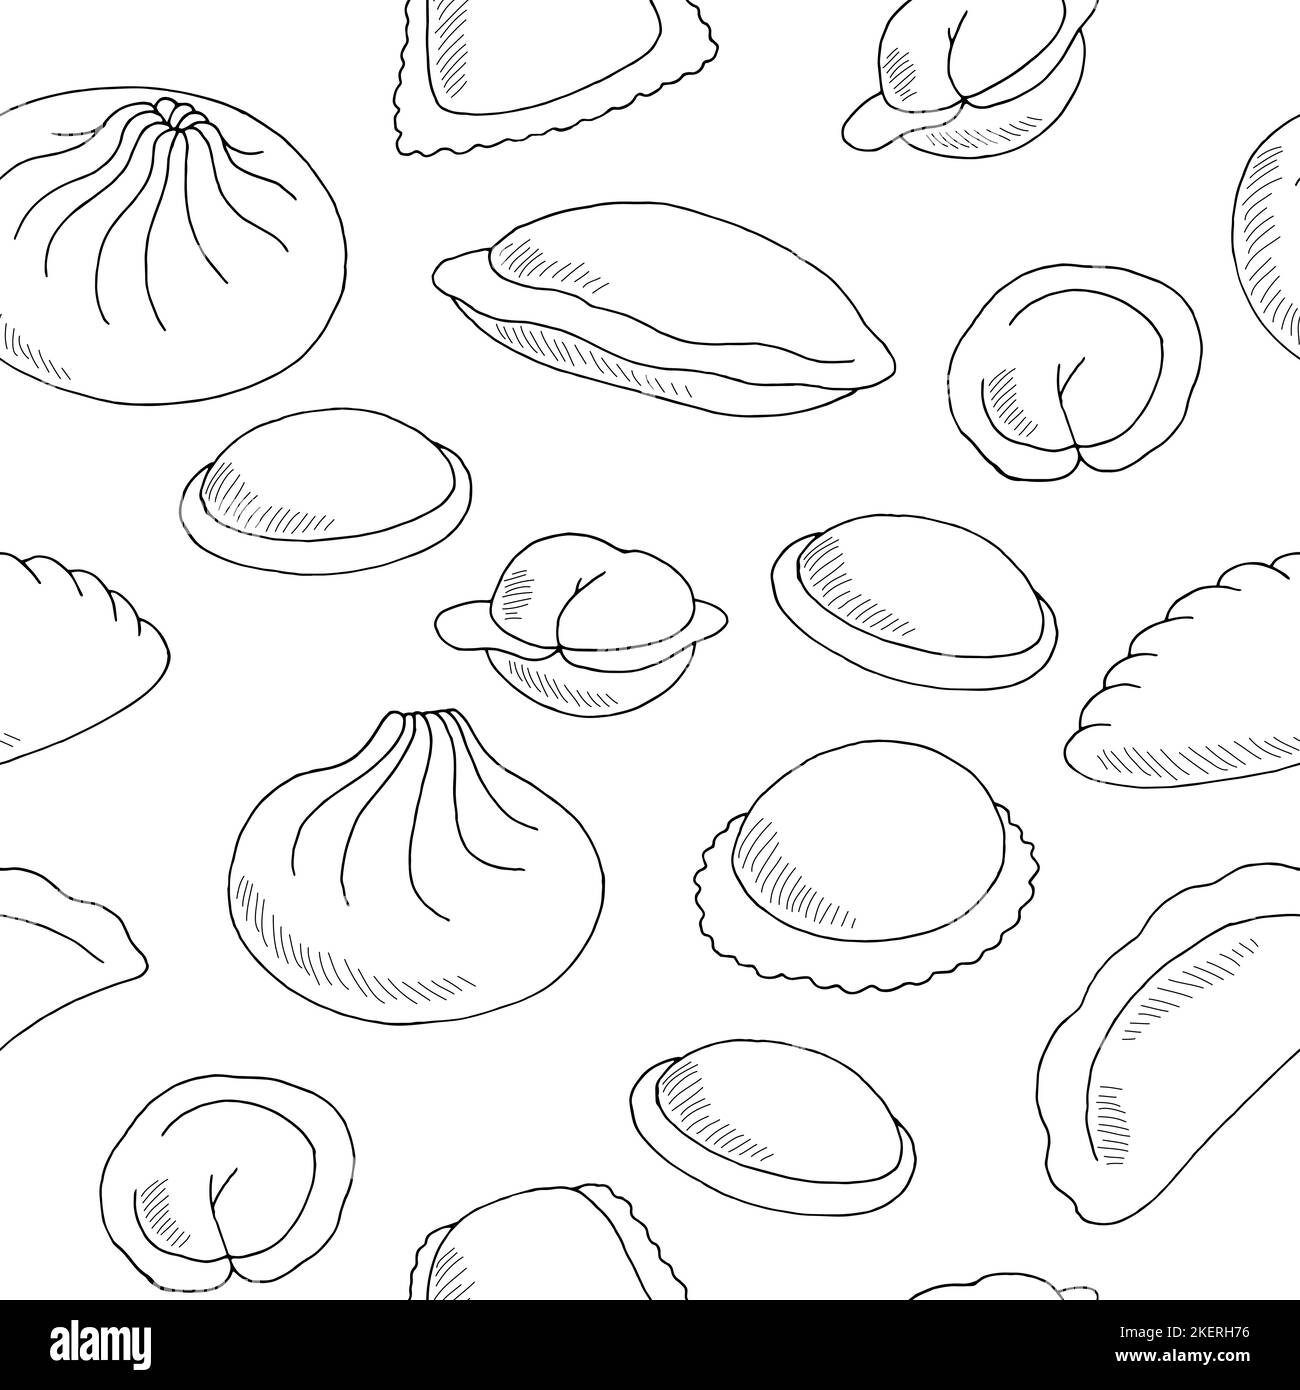 Dumplings seamless pattern background graphic food black white sketch illustration vector Stock Vector